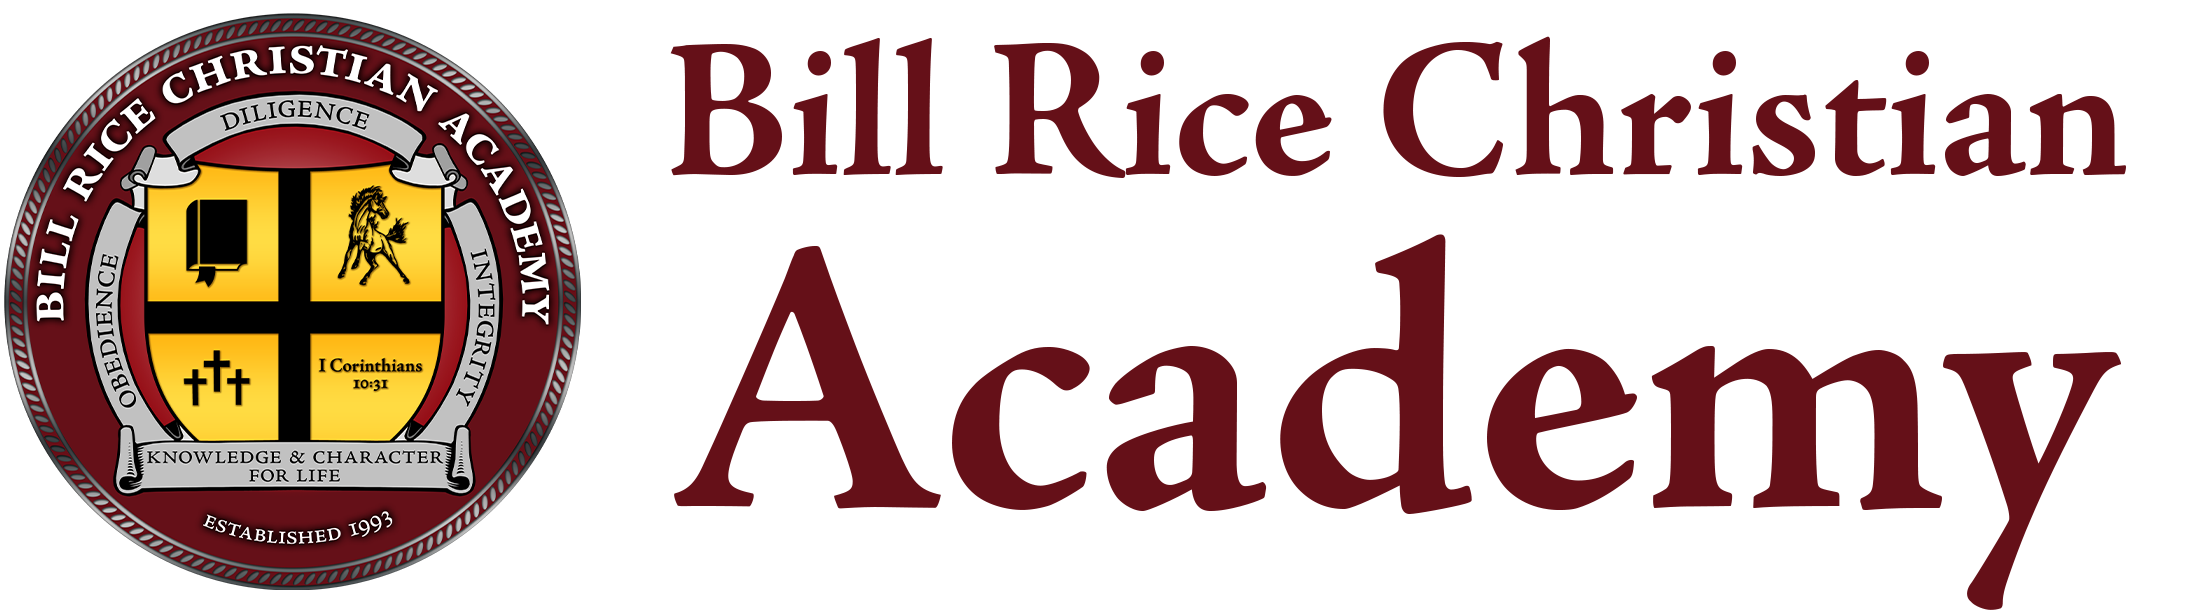 Bill Rice Christian Academy